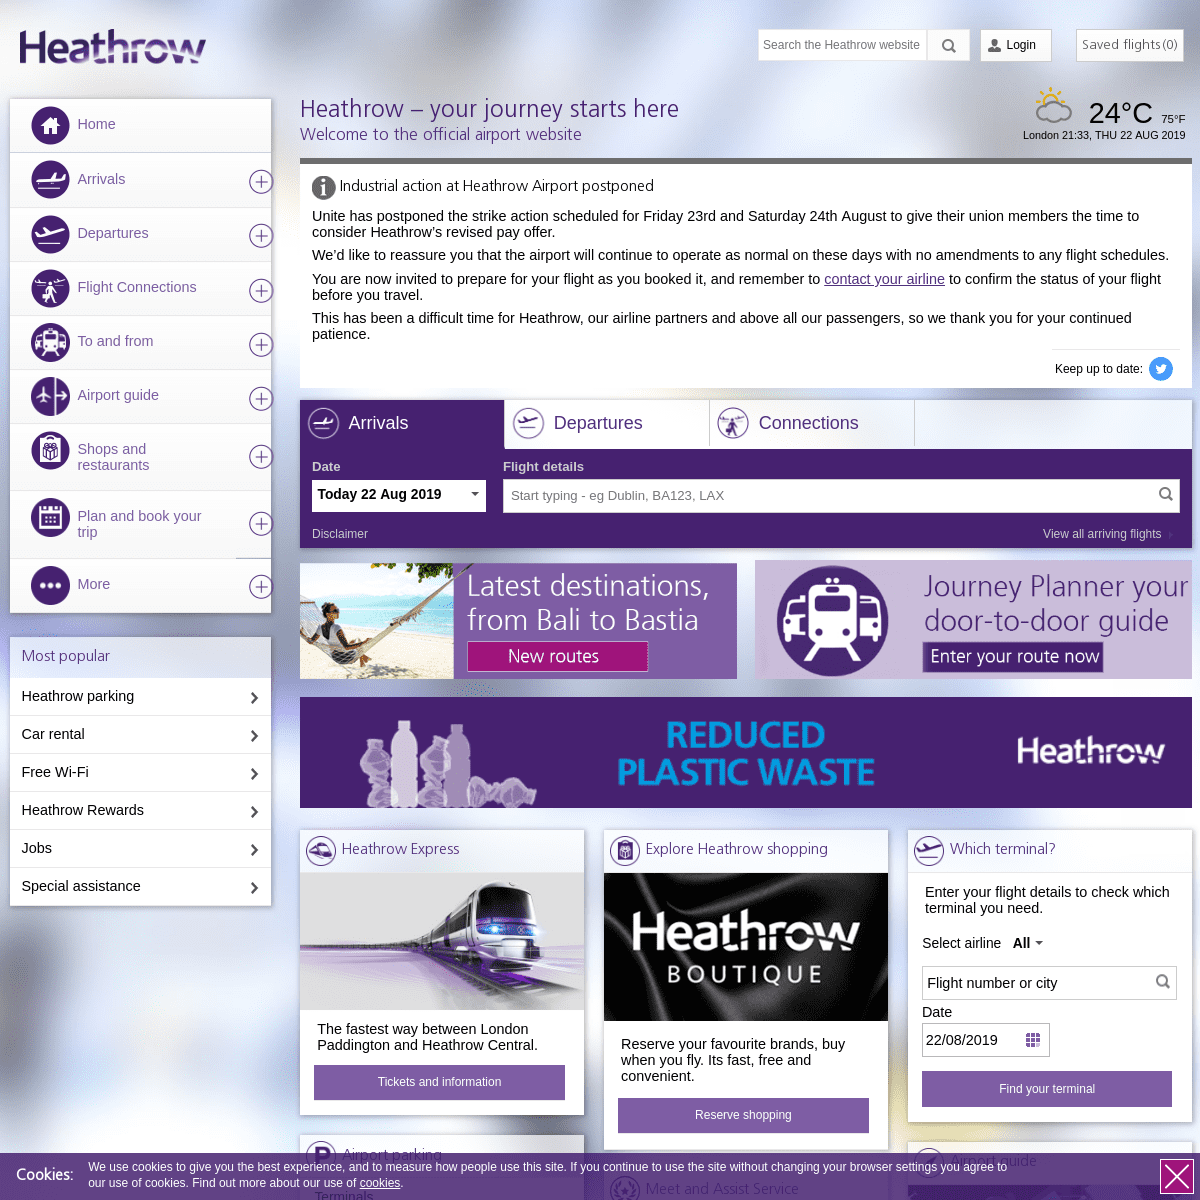 A complete backup of heathrow.com